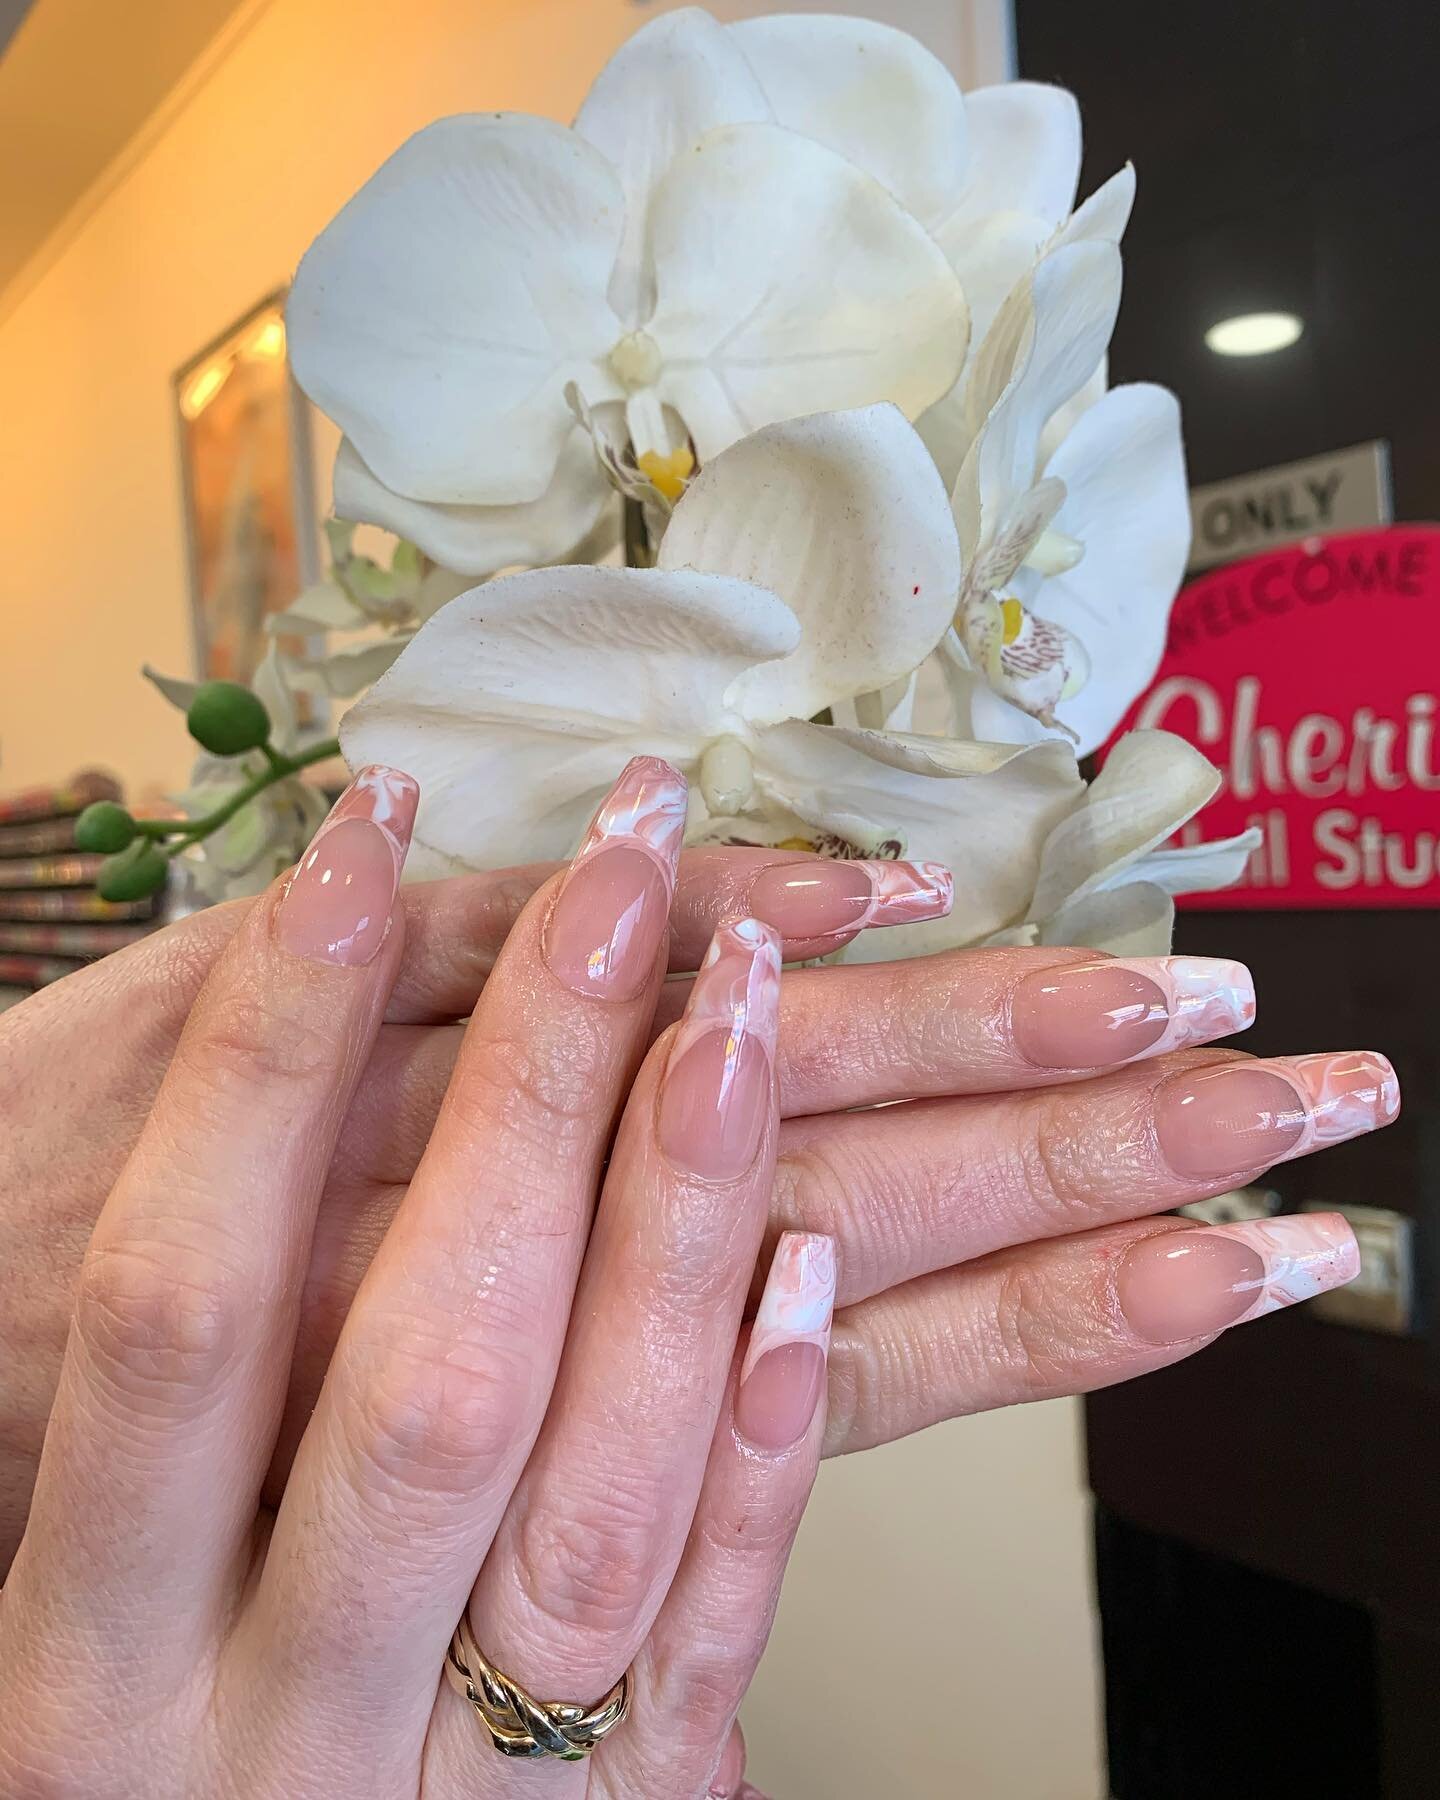 Wow look at these marble effect tips! 

#nails #nailart #manicure #gelnails #nailstagram #nailswhitetip #nailcolourtip  #nailstyle #nailsart #naildesign #inspire #acrylicnails #gel #nailsnailsnails #nailtech #pedicure #gelpolish #marblenails #marblet